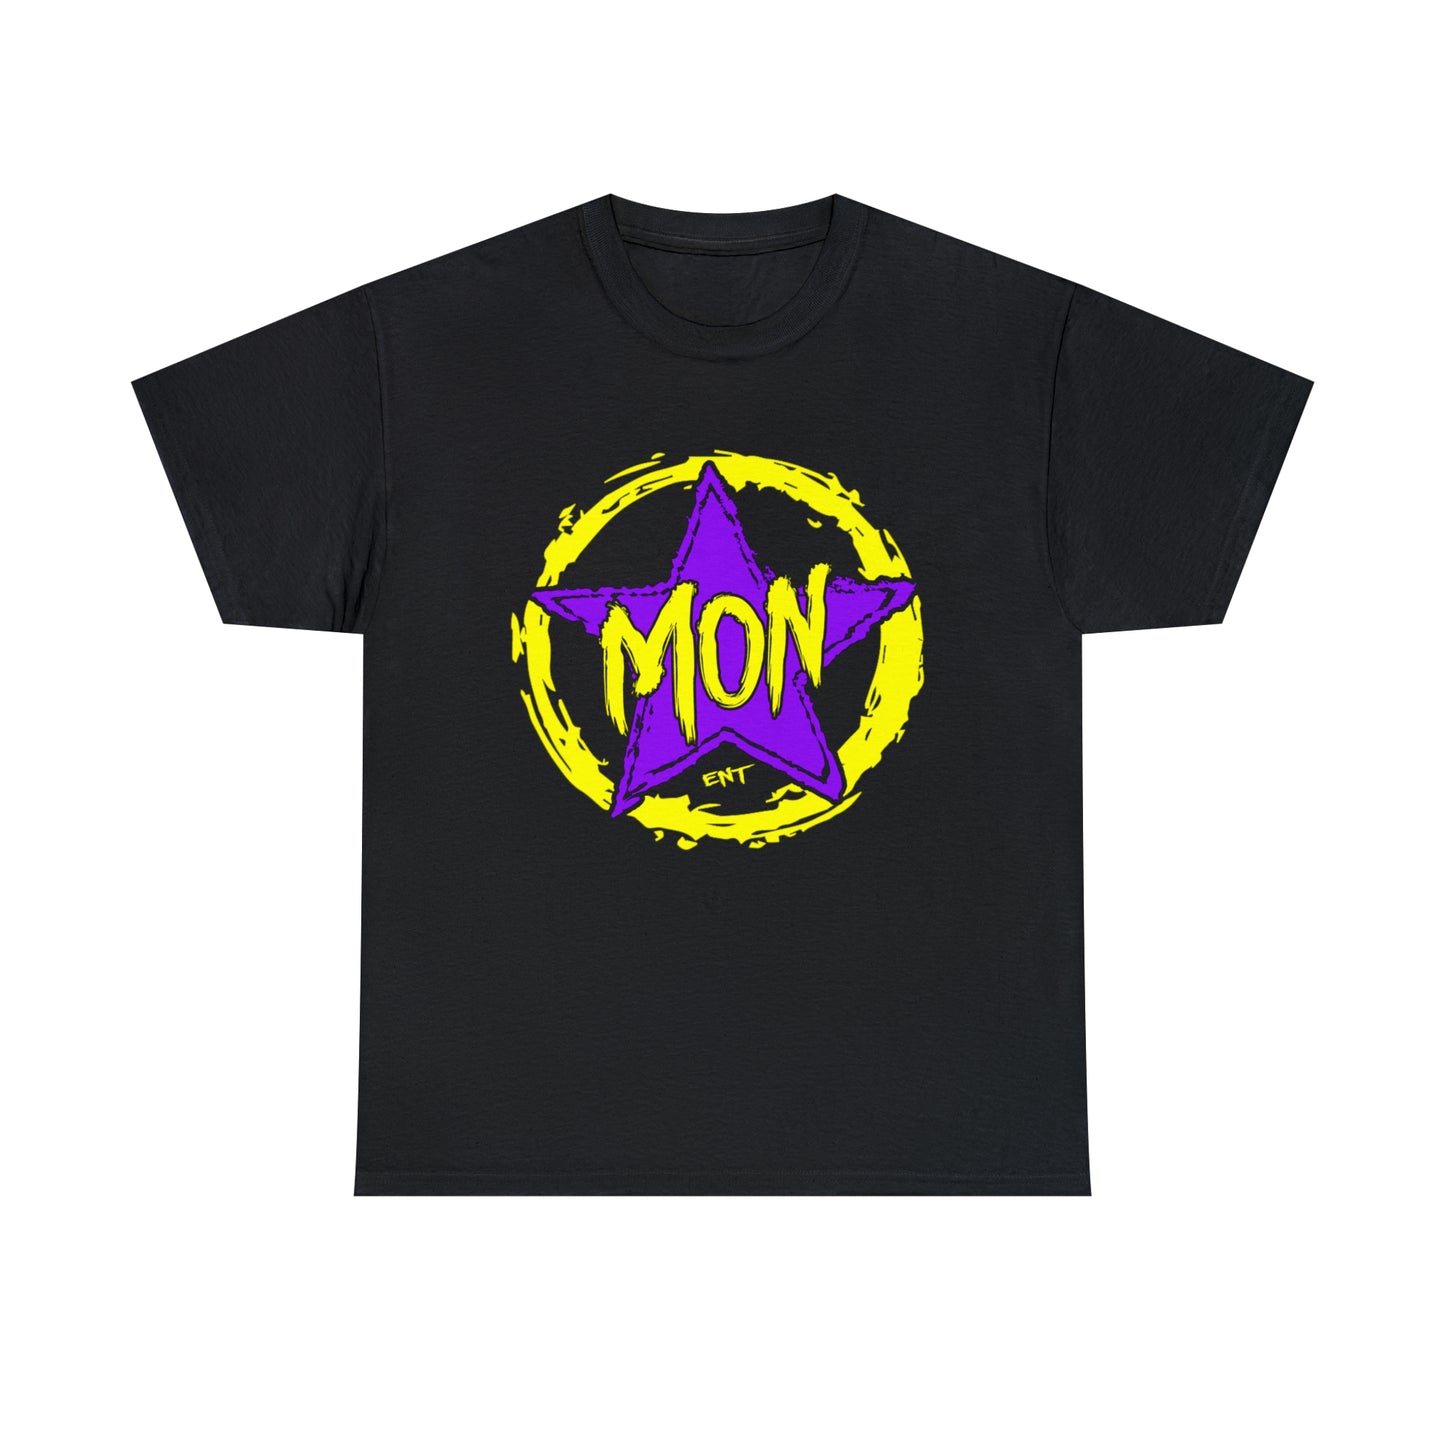 Monstar "Lakers" Variant T-Shirt